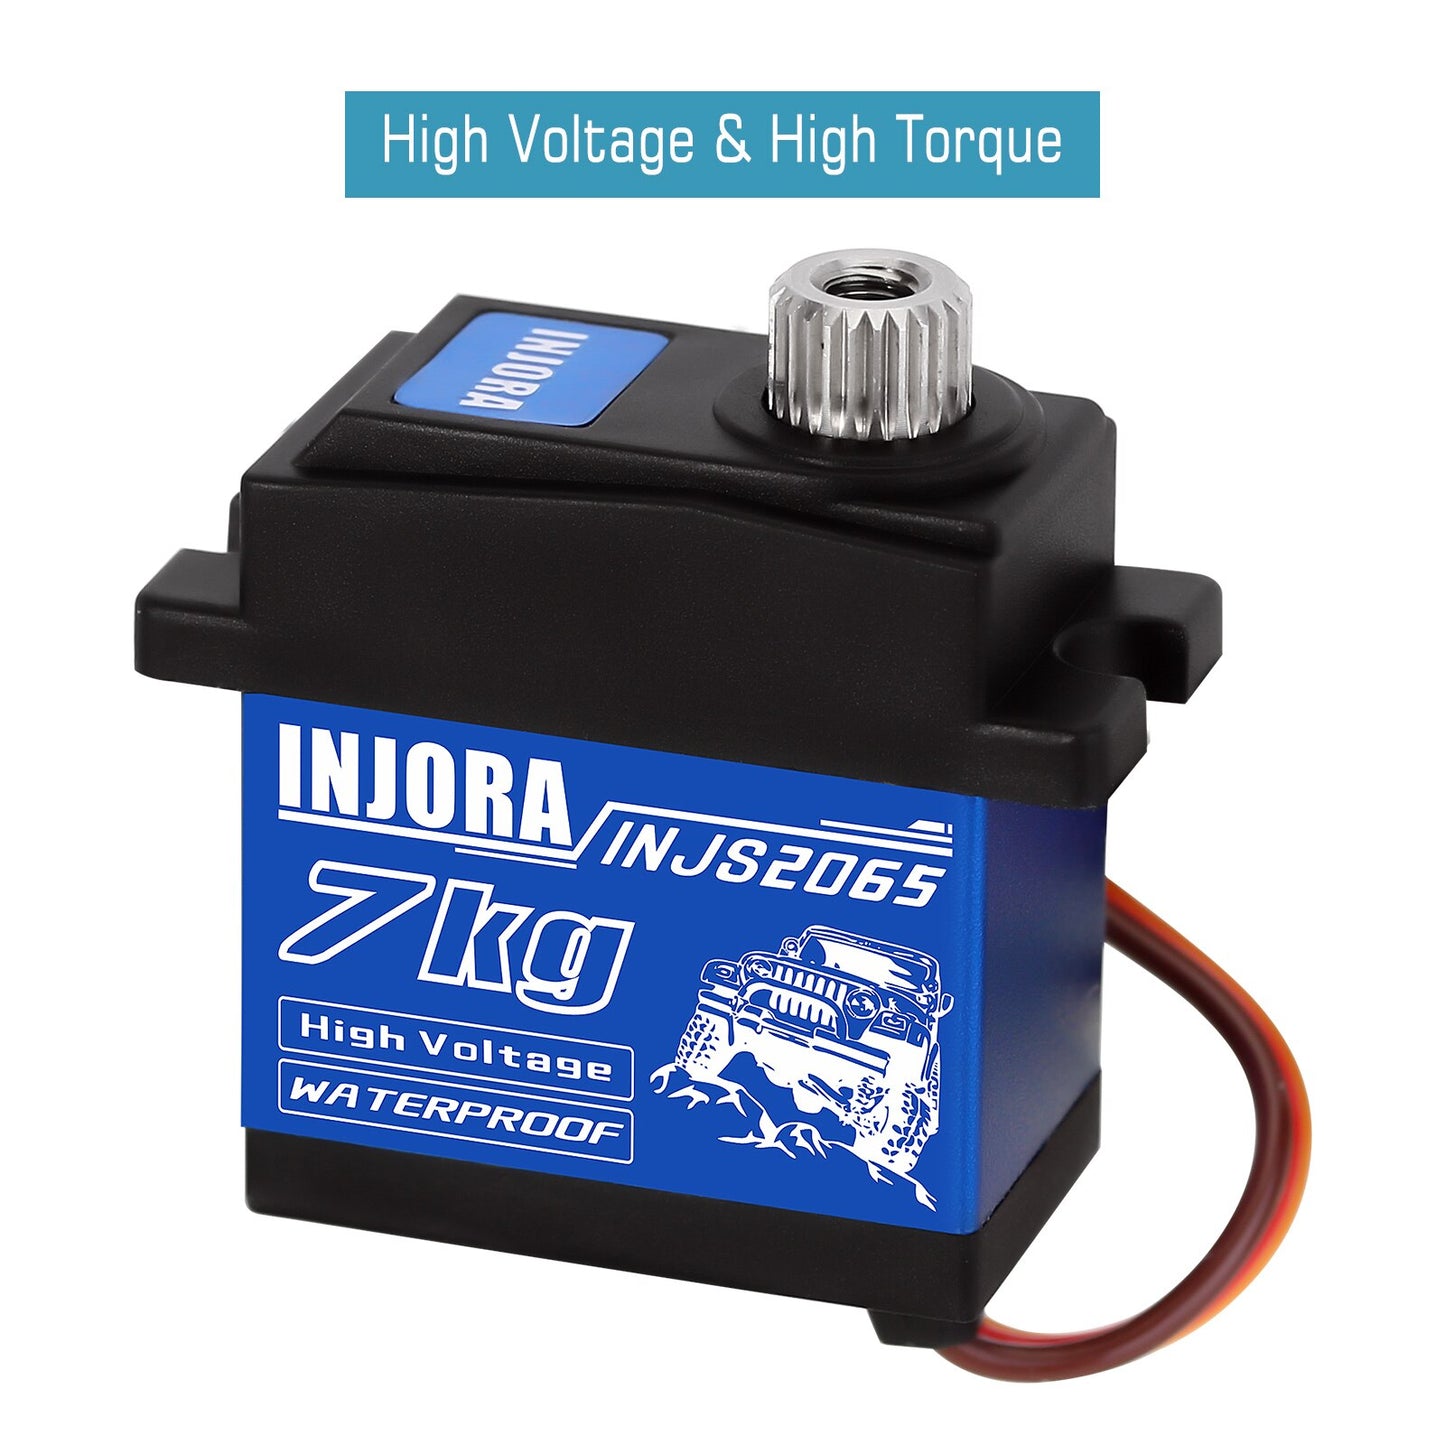 INJORA INJS2065 7KG 2065 Digital Servo Waterproof High Voltage Sub Micro Servo For 1/10 RC Crawler Car SCX10 III TRX4 TRX6